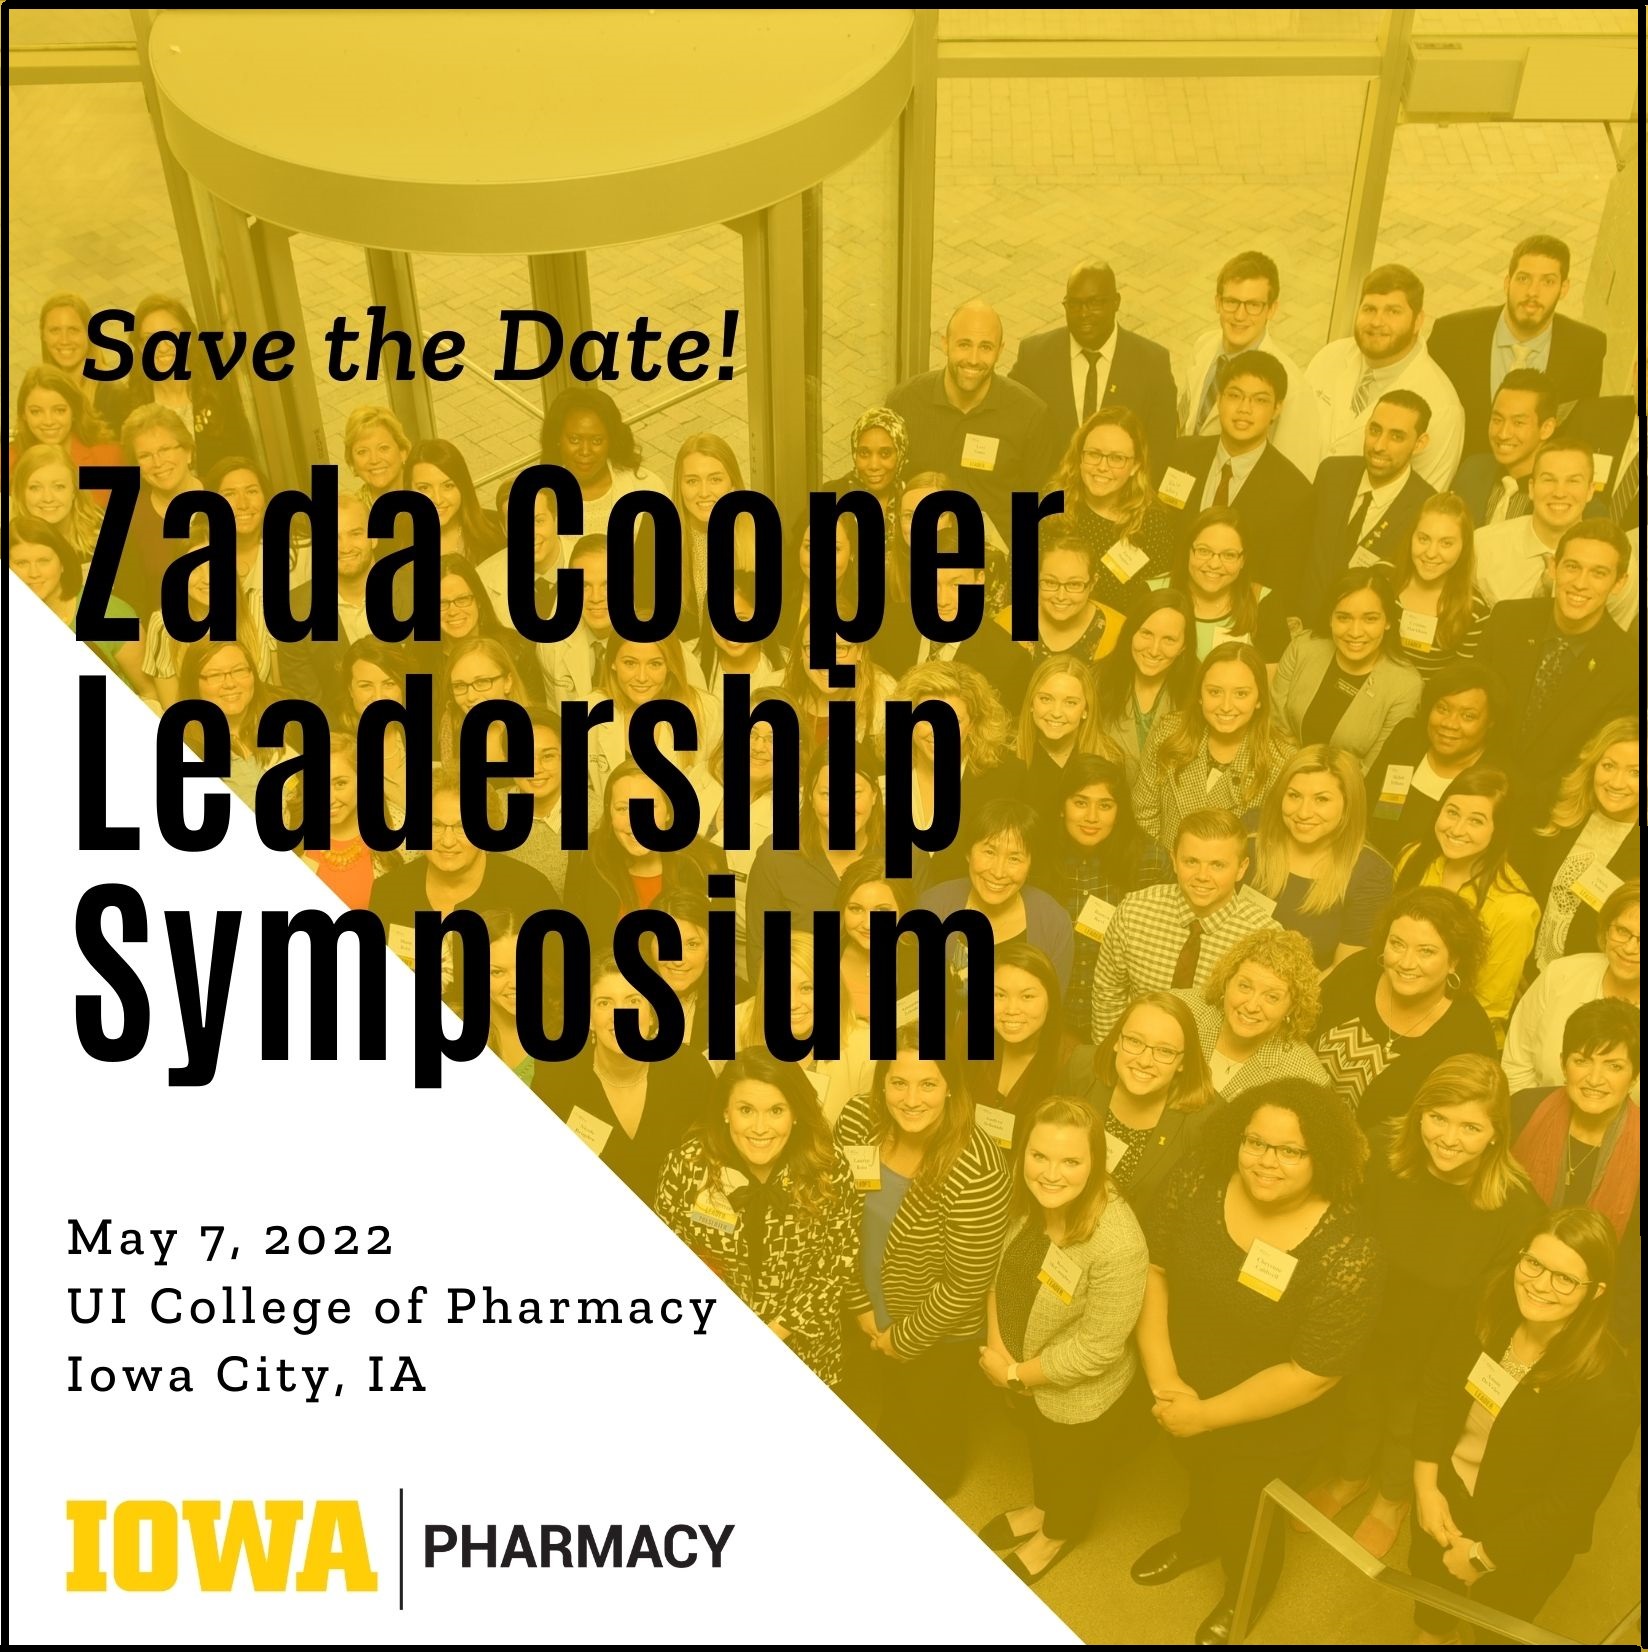 Zada Cooper Leadership Symposium